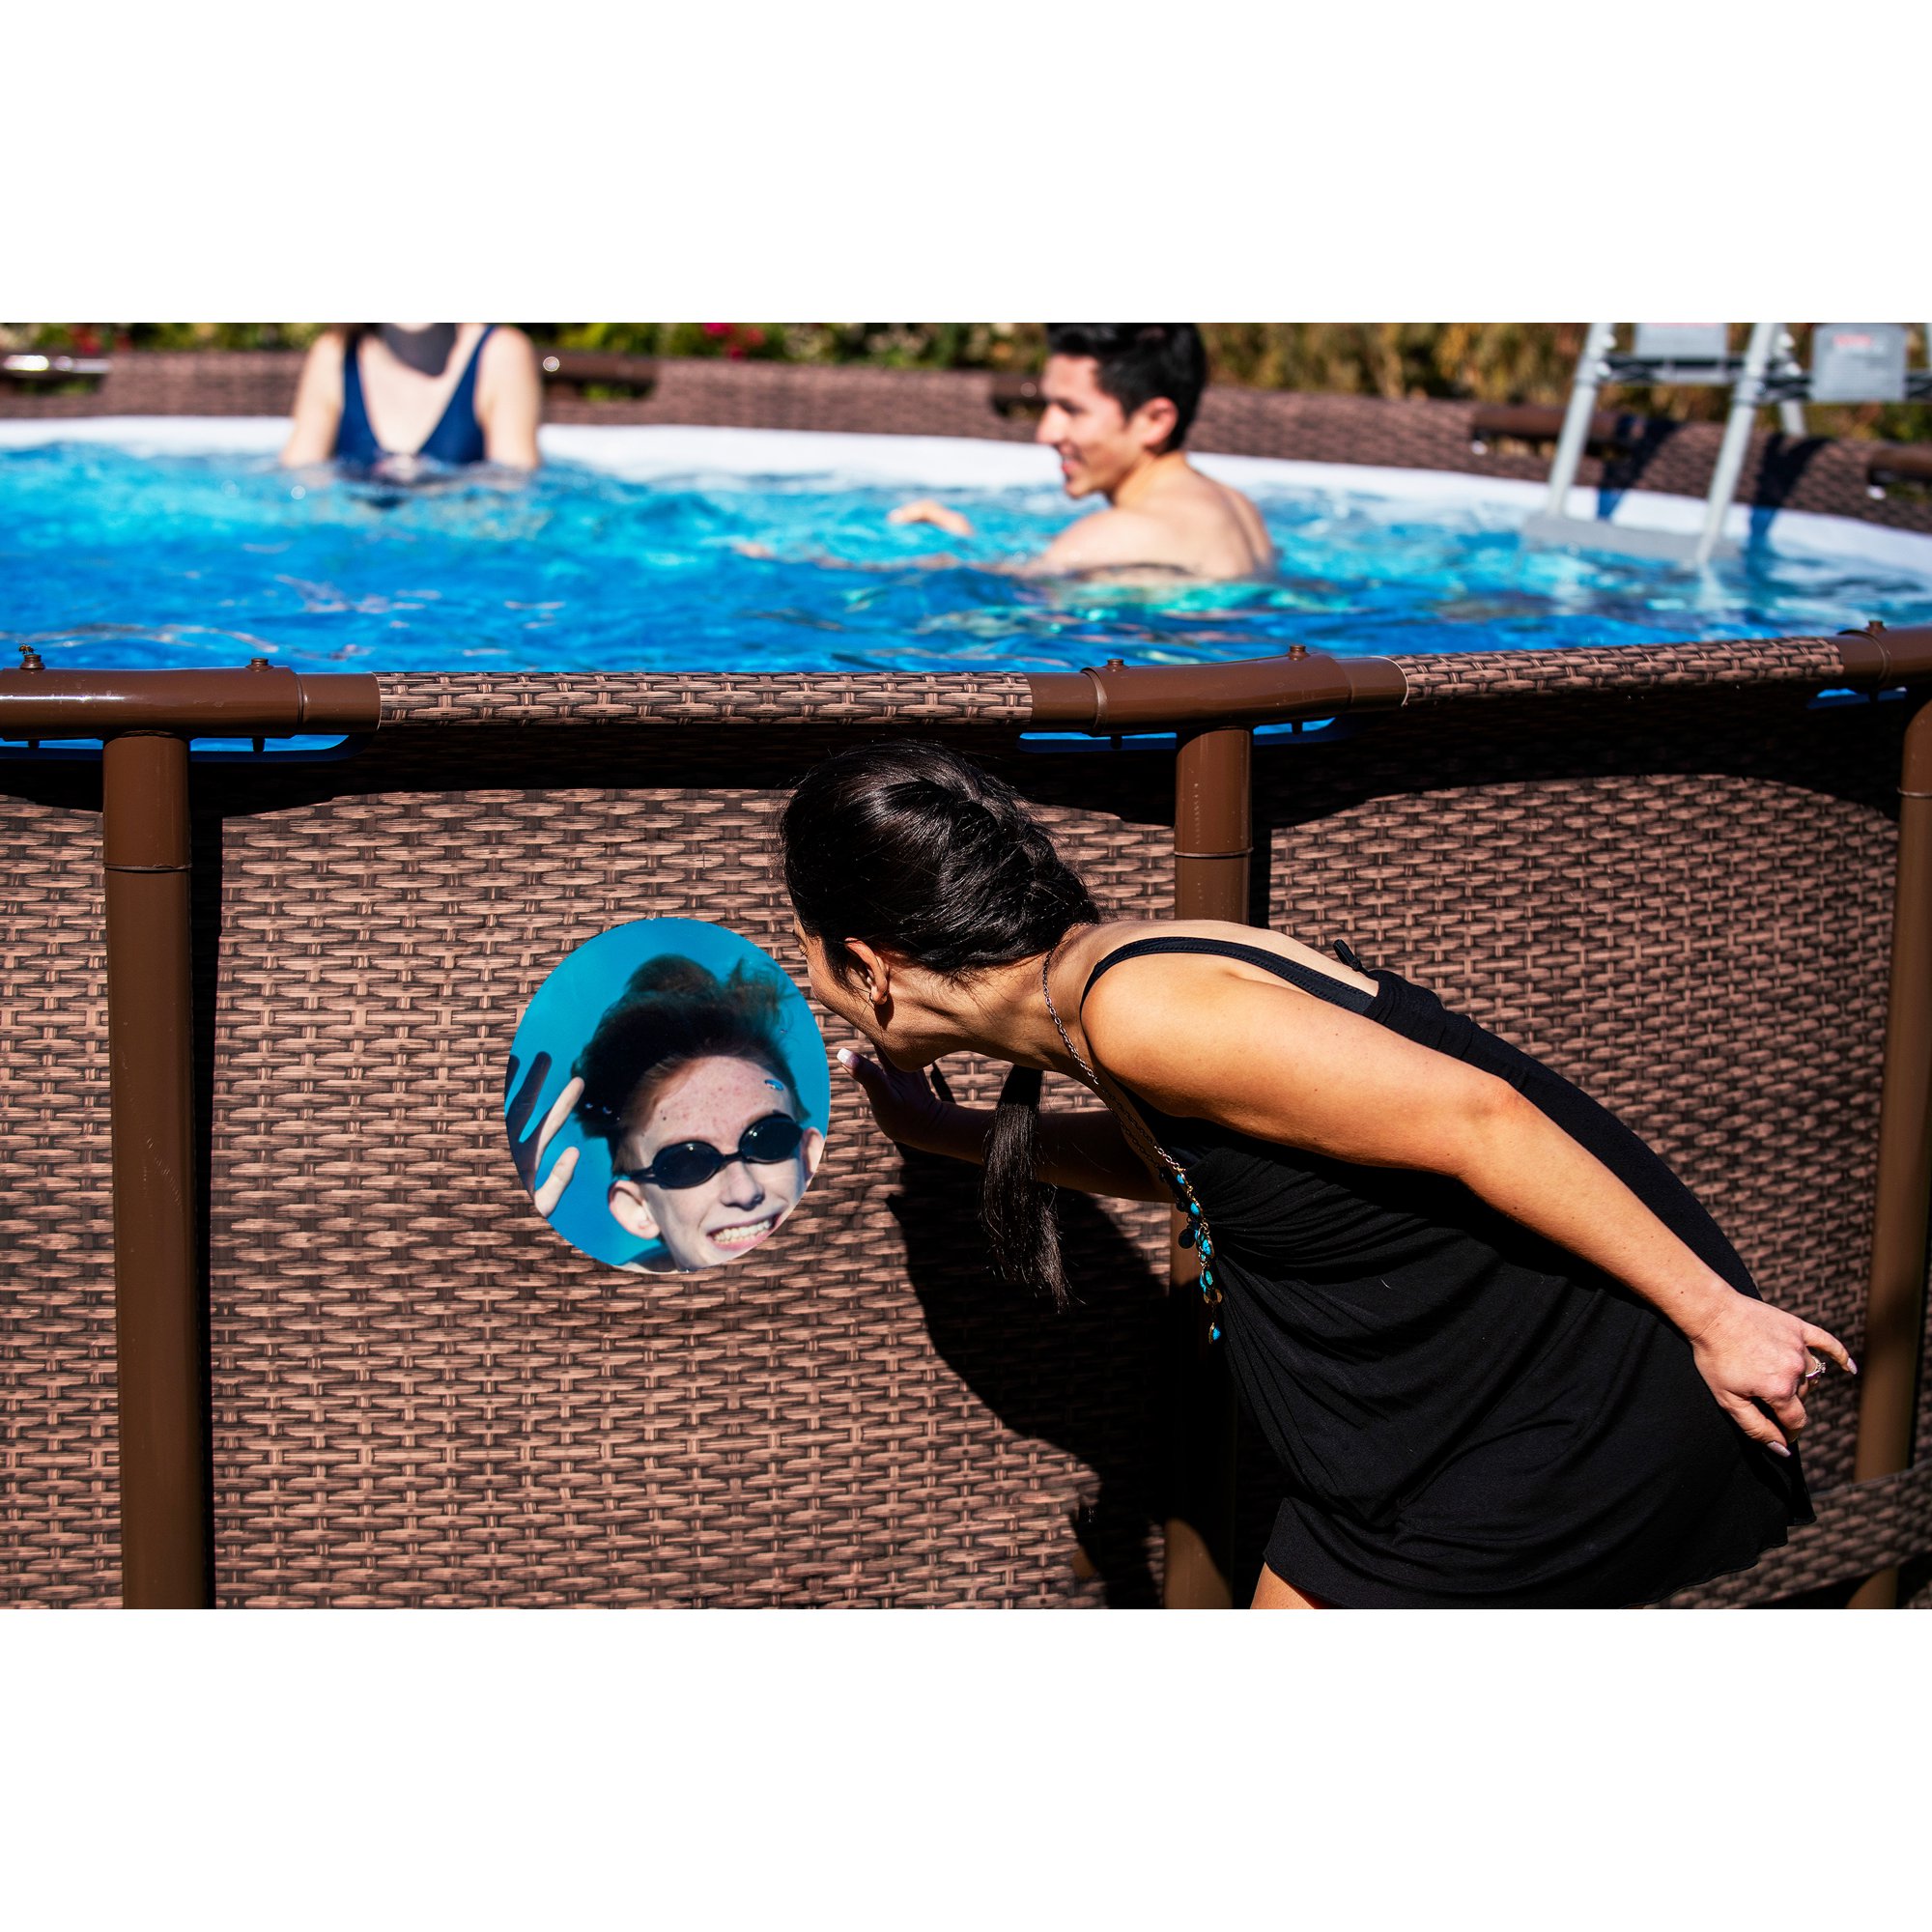 Coleman Vista II 22'x52" Swimming Pool Set for sale online 